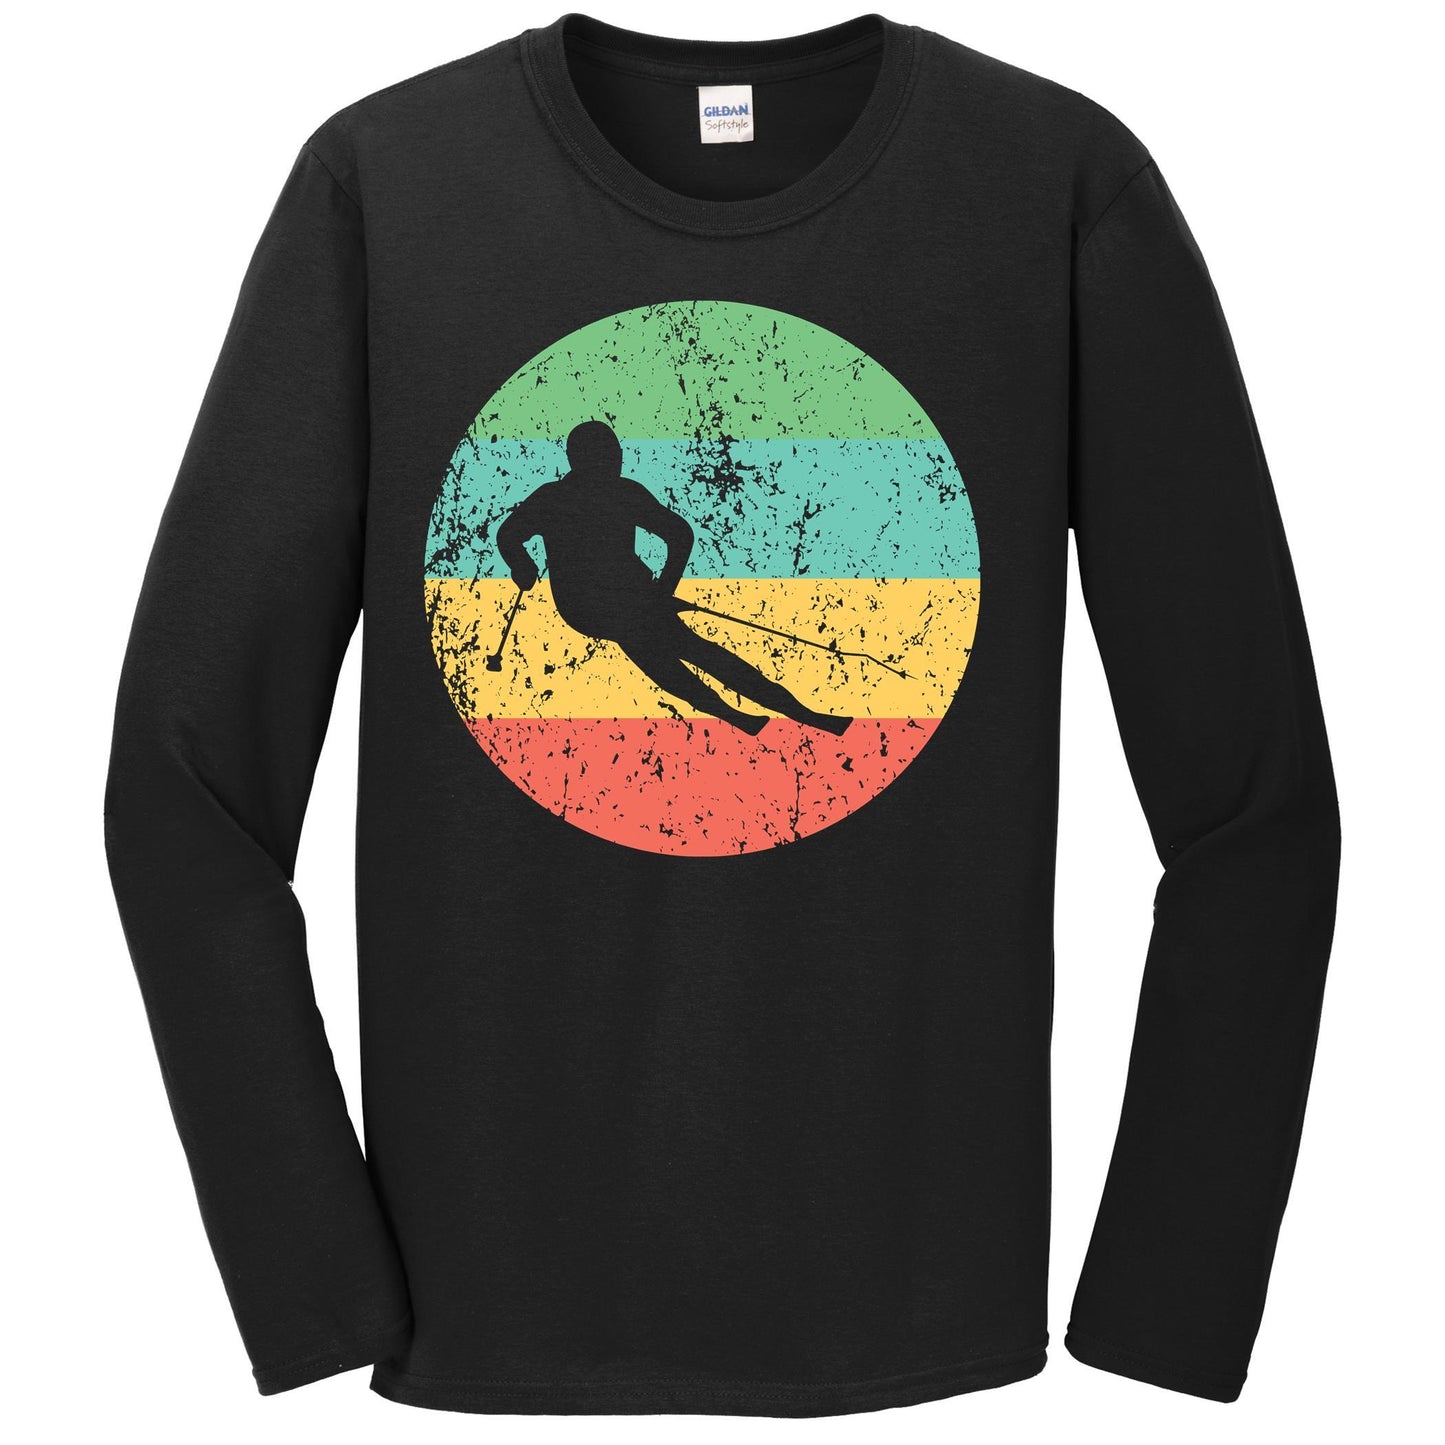 Skiing Long Sleeve Shirt - Vintage Retro Skier T-Shirt